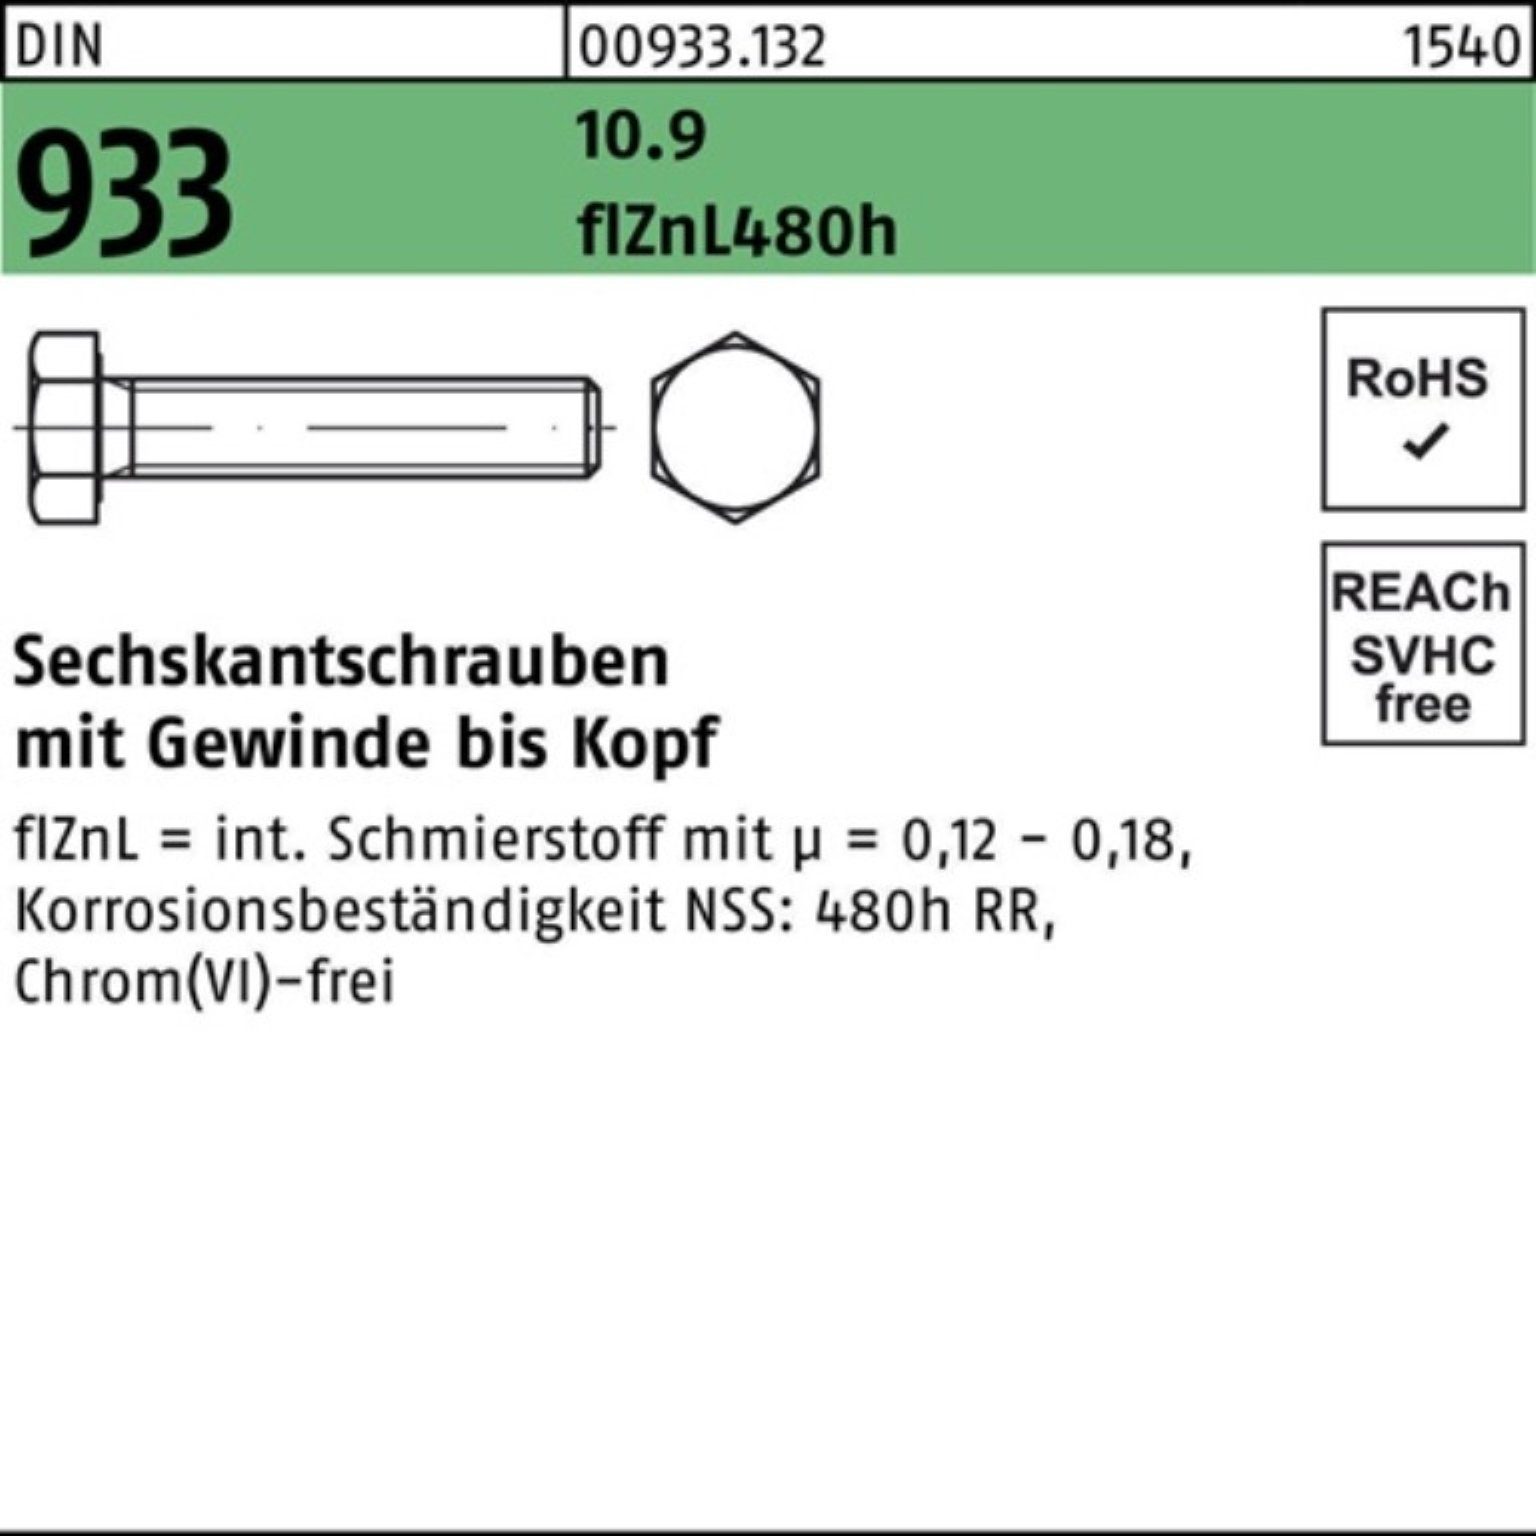 M6x 10.9 flZnL/nc/x/x/480h Sechskantschraube 40 933 DIN VG 200er Pack Sechskantschraube Reyher